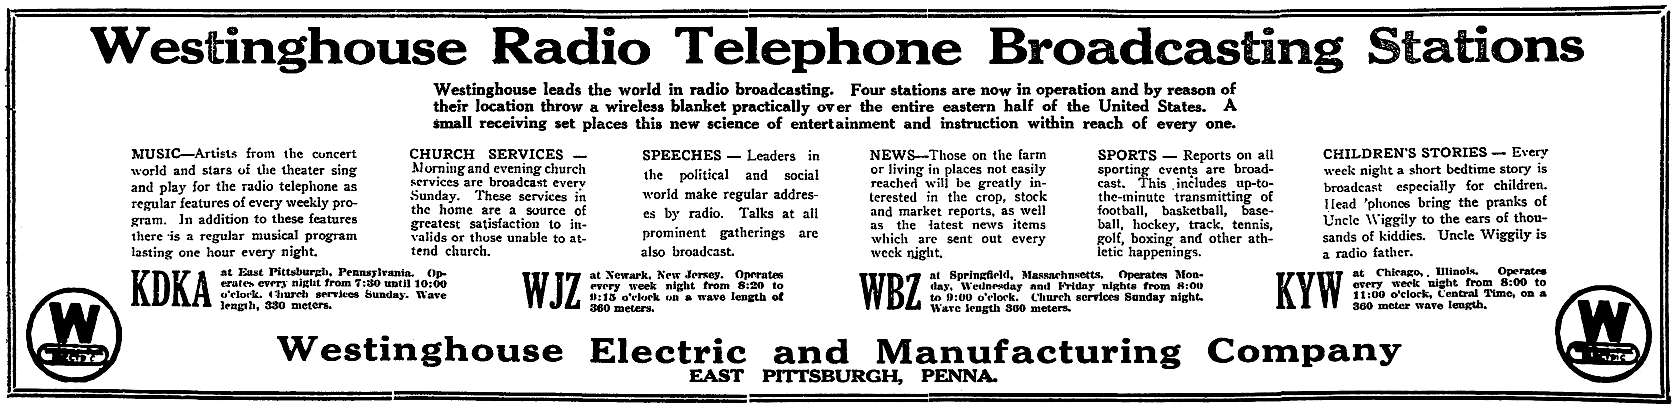 Westinghouse broadcasting advertisement